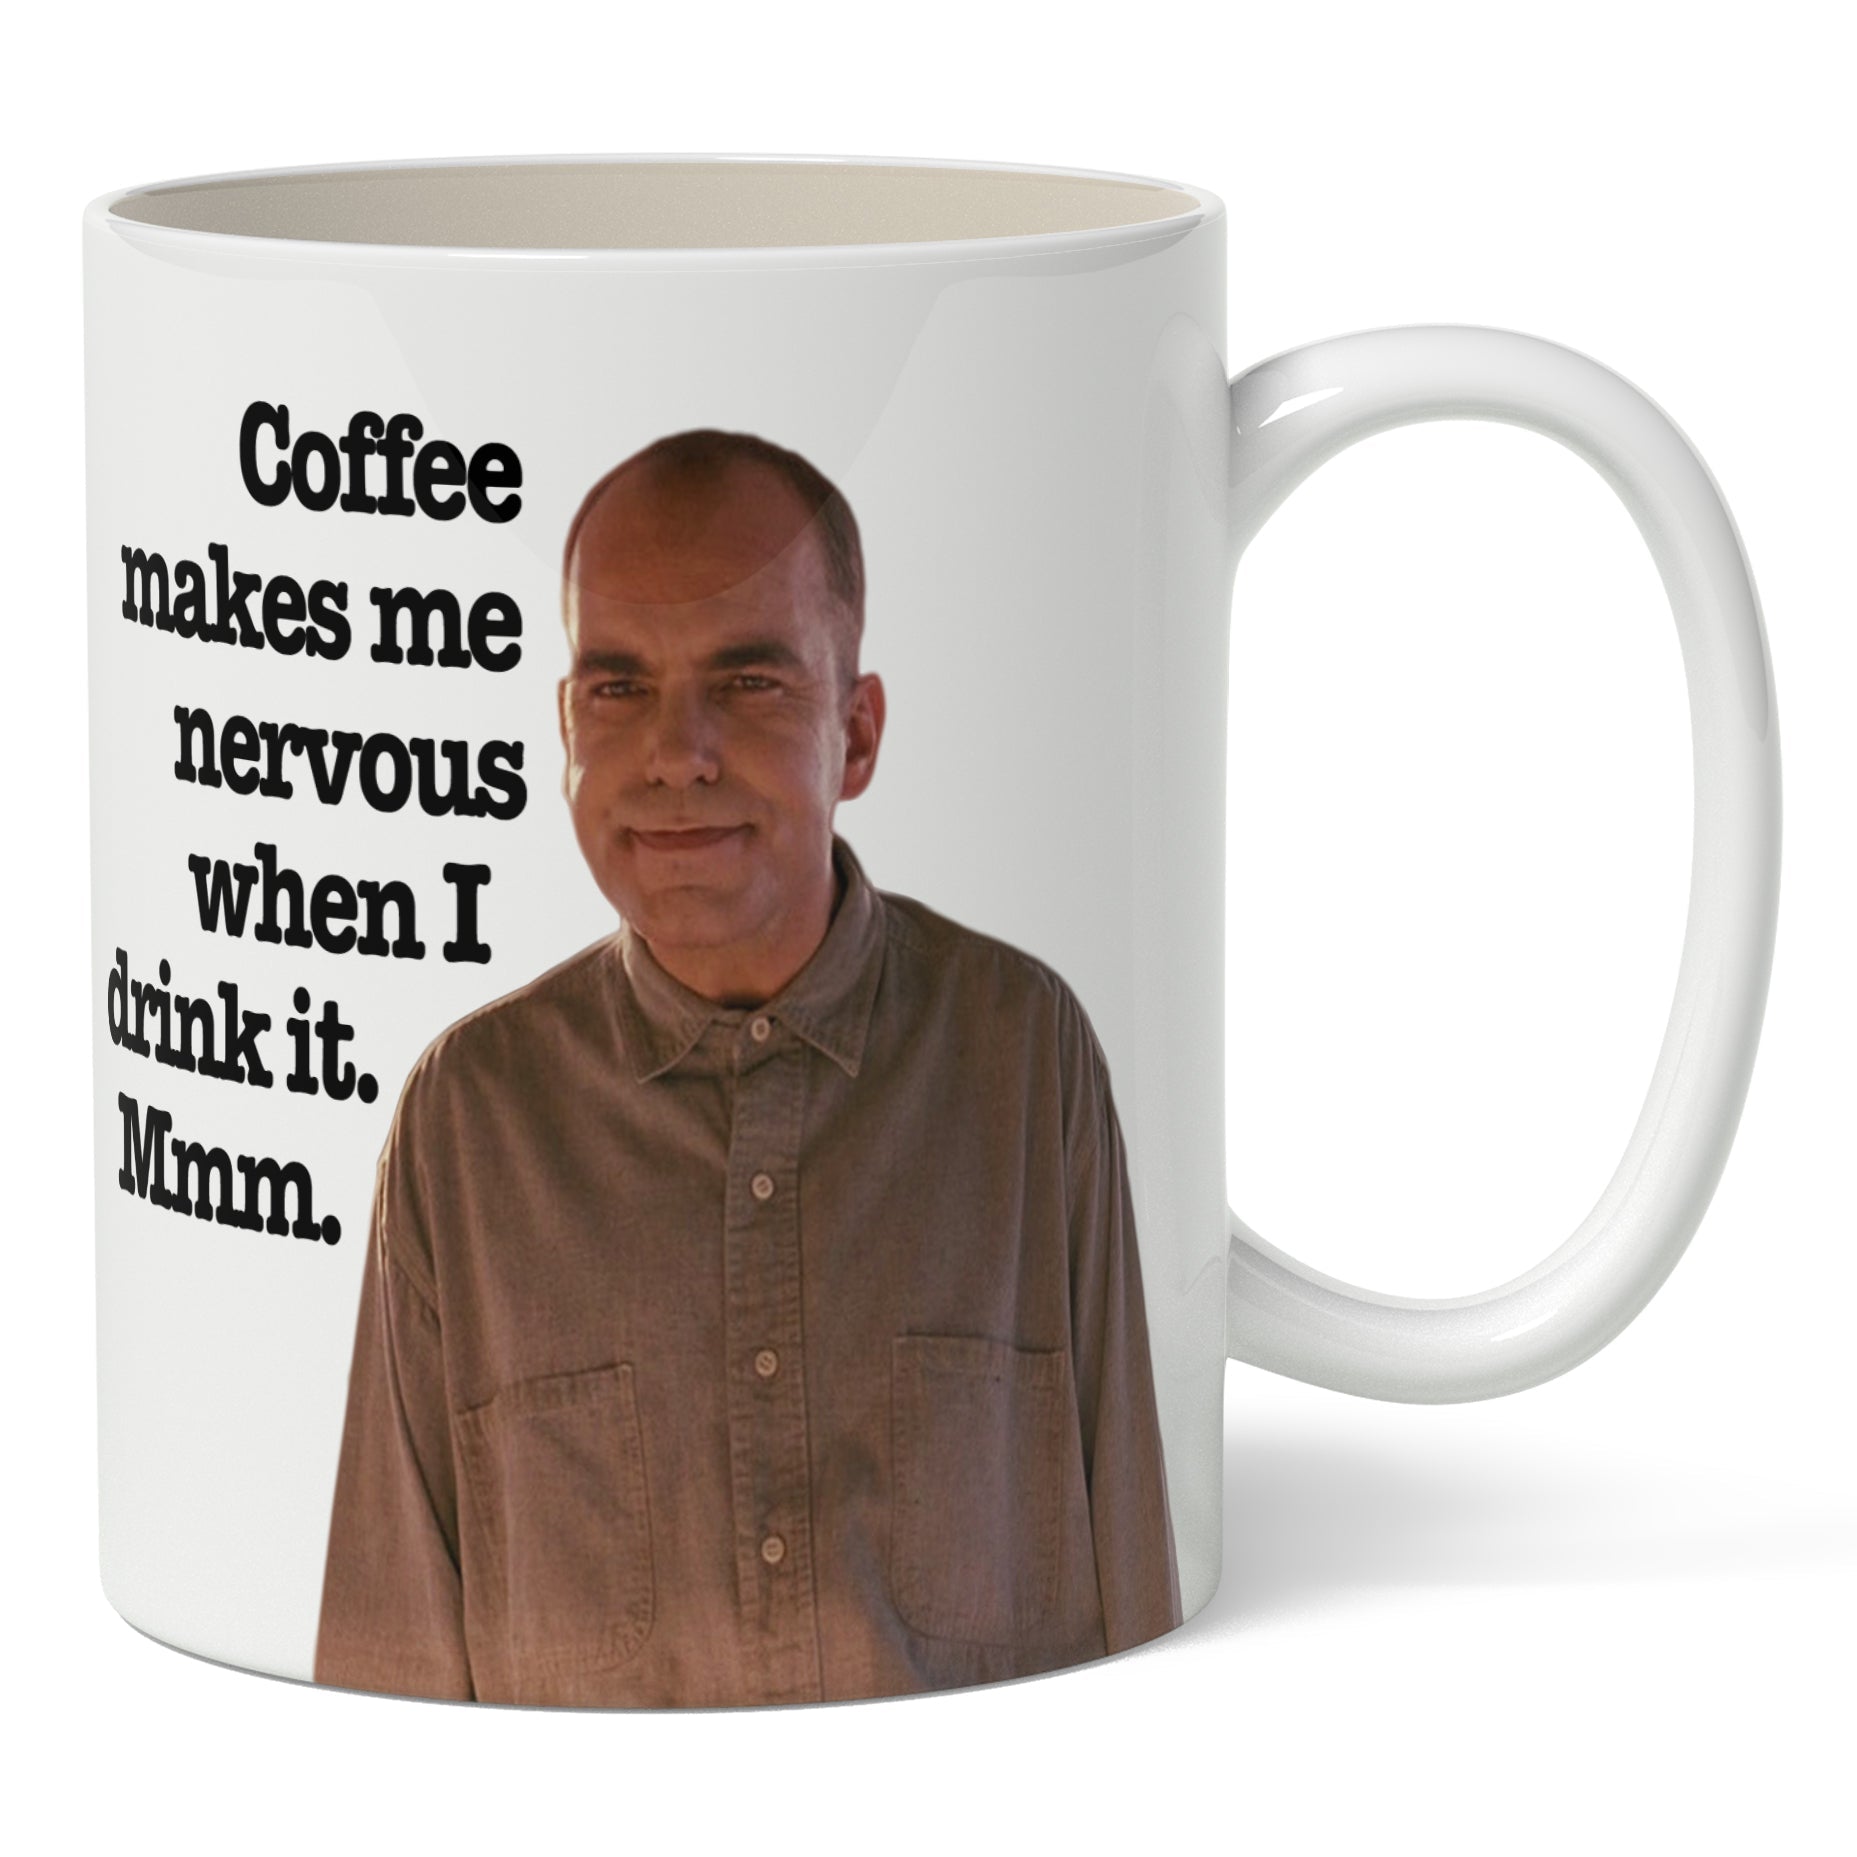 makes me coffee shirt